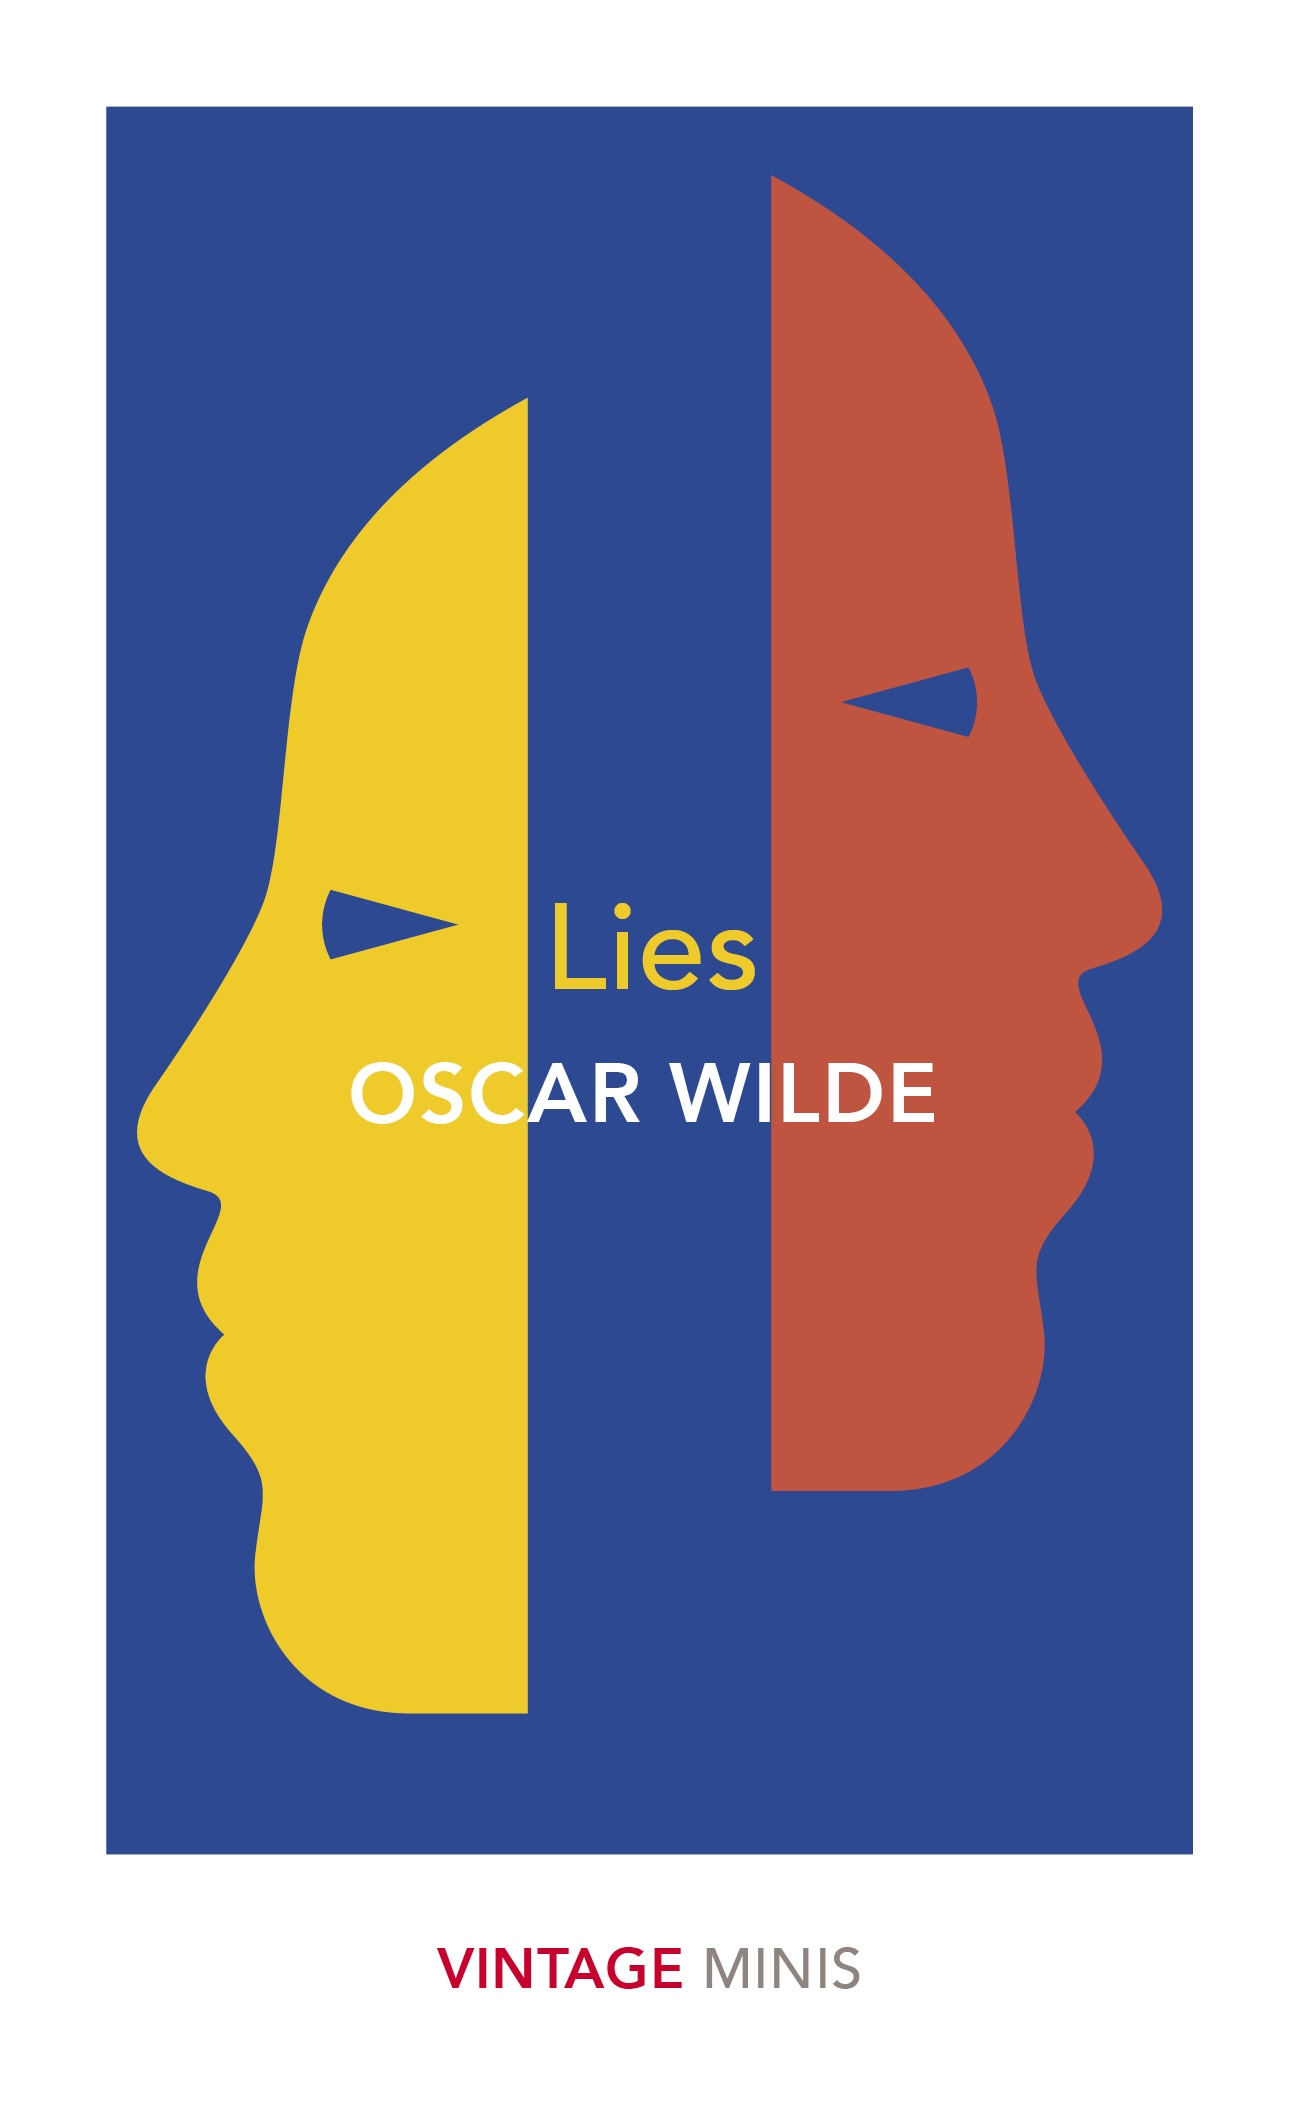 Book “Lies” by Oscar Wilde — March 5, 2020